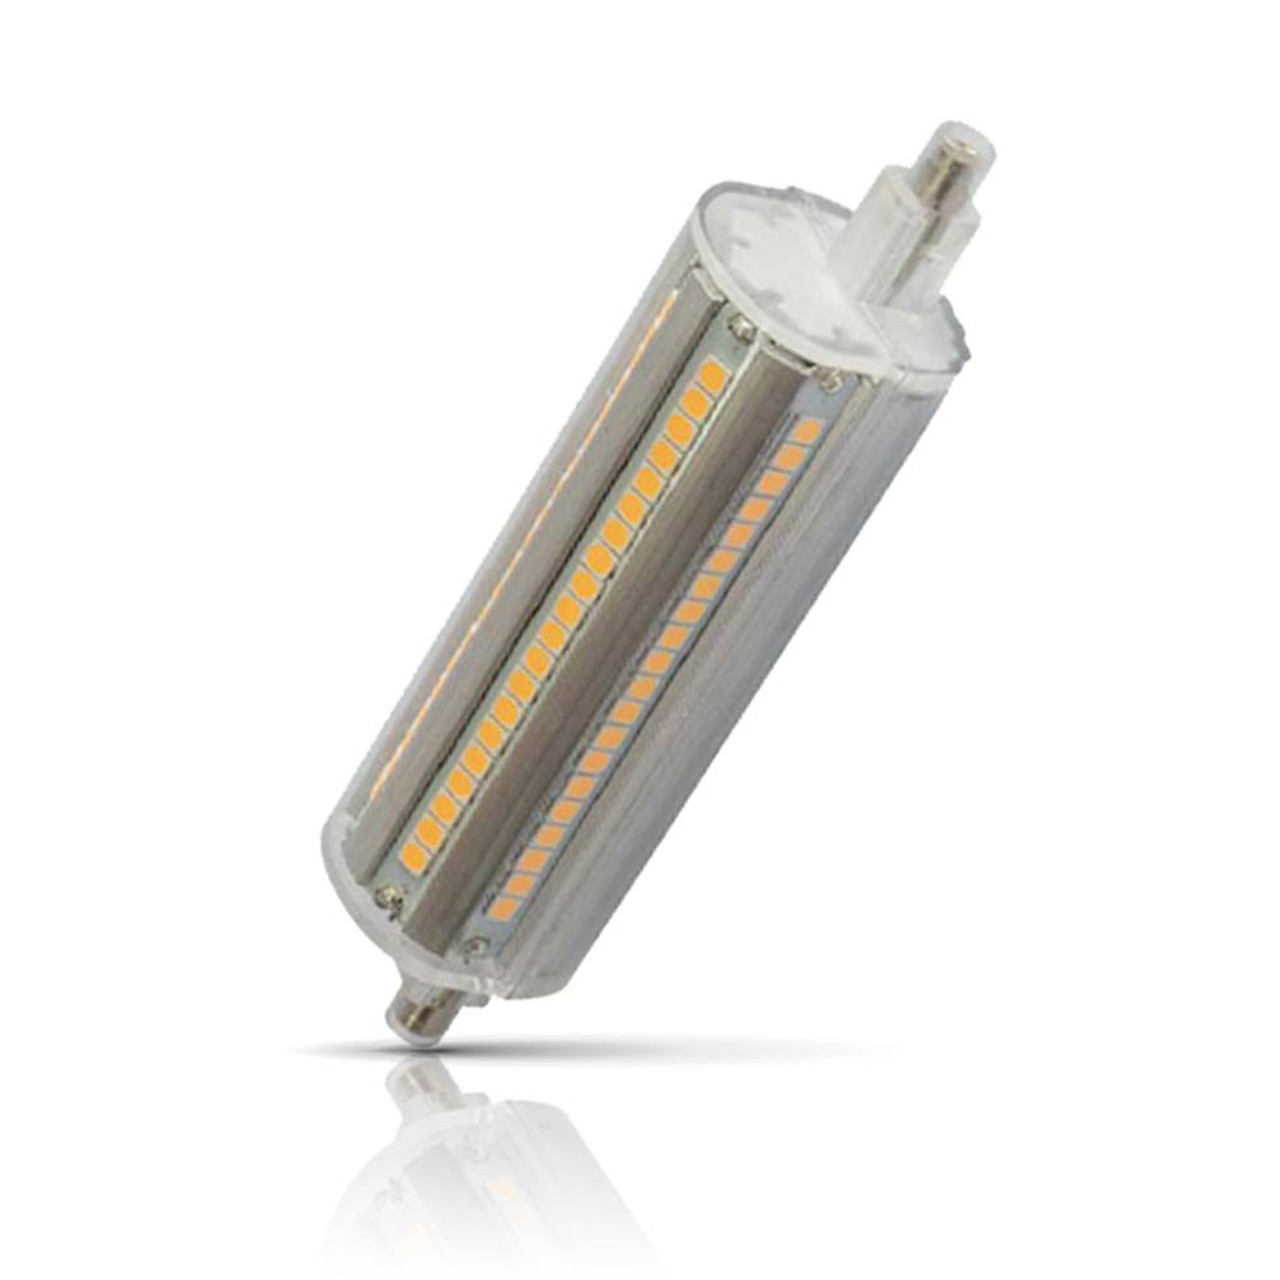 Prolite LED 118mm Linear 14W R7s Dim 3000K Clear